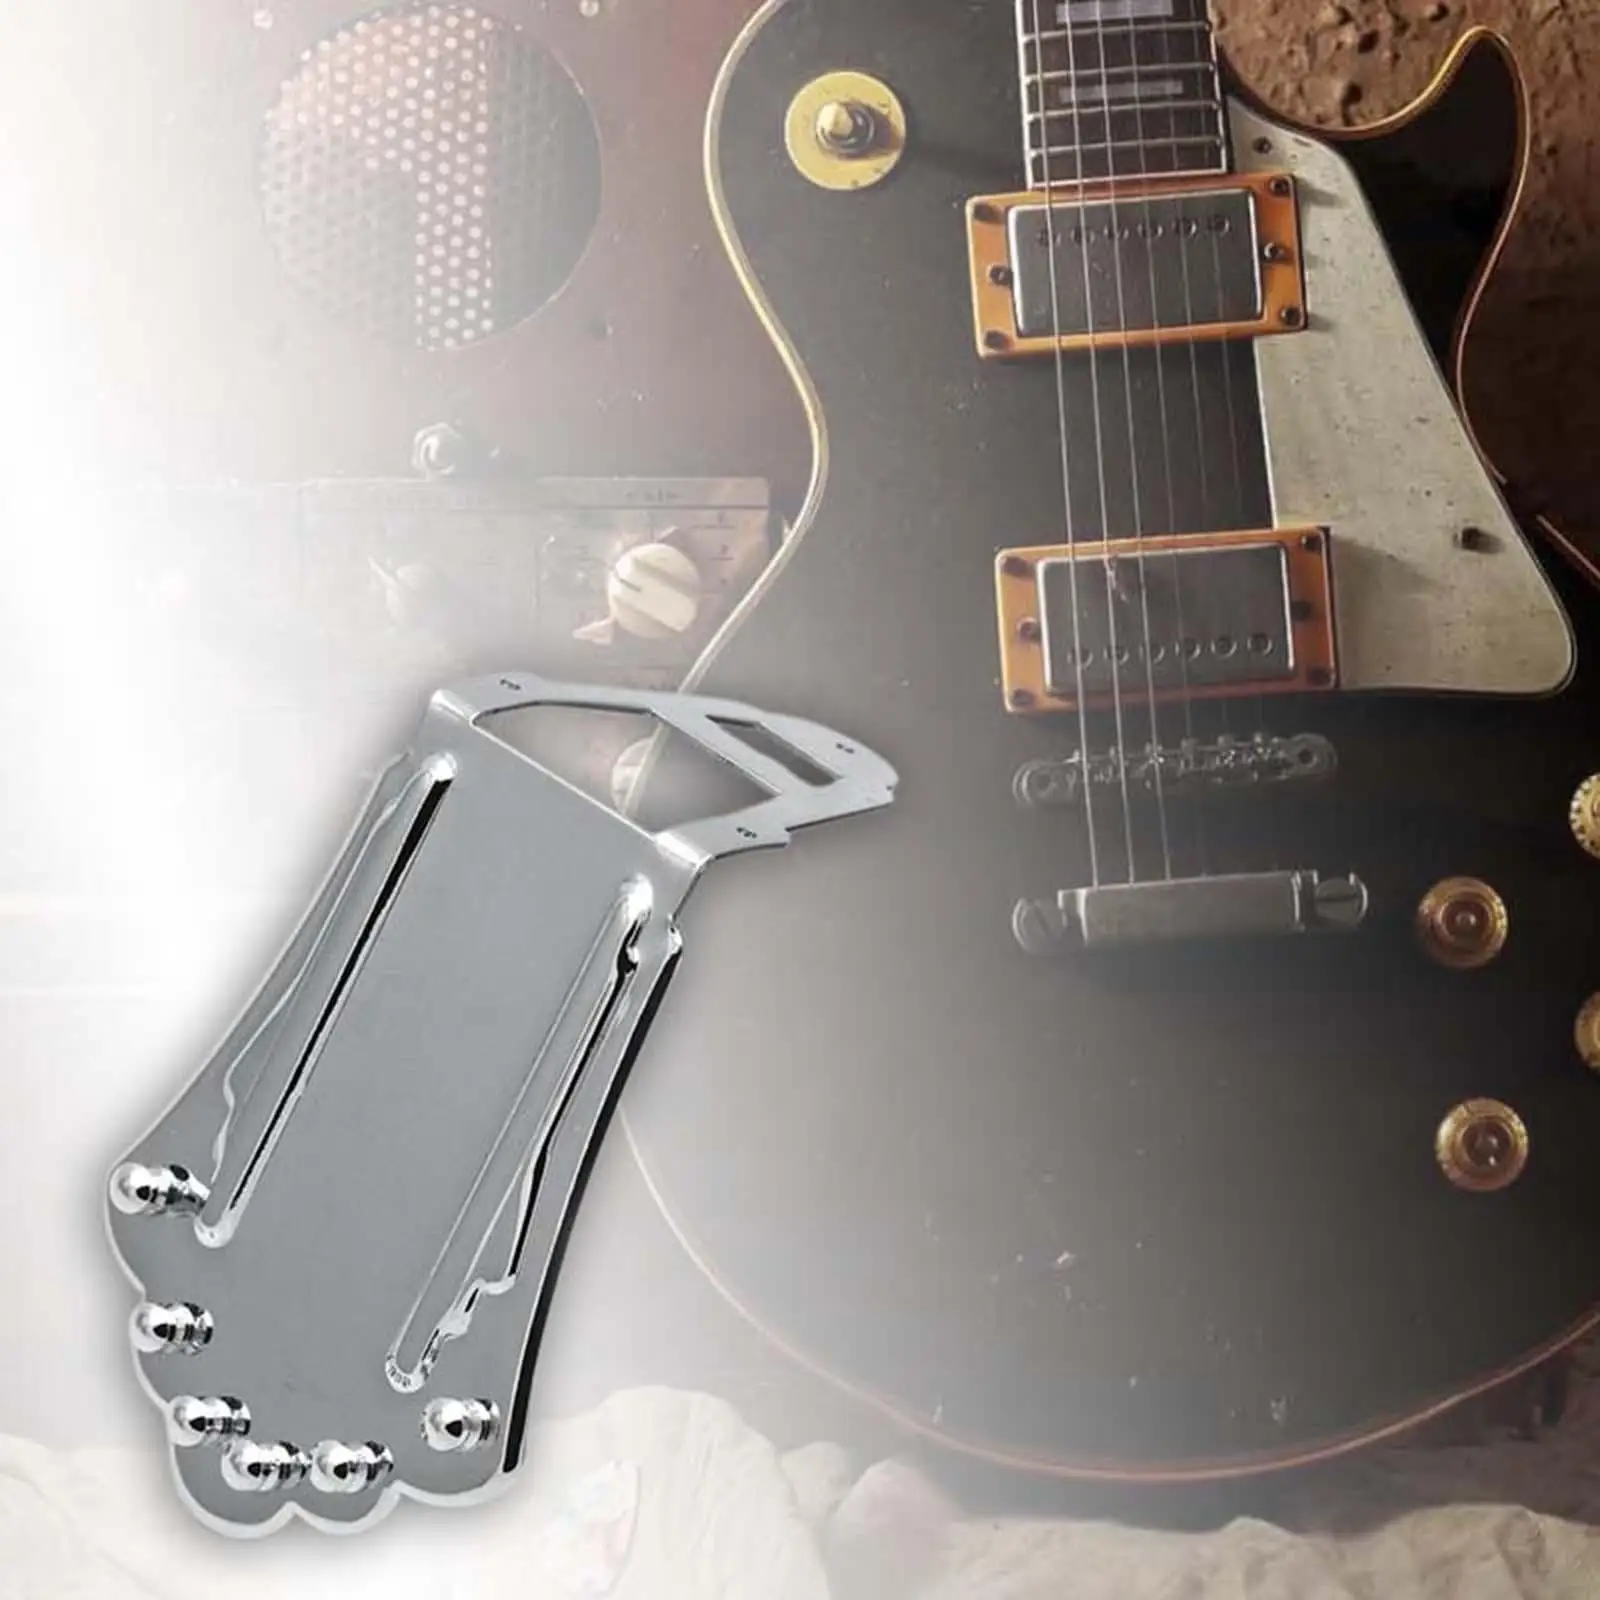 Guitar Trapezoidal Tailpiece Bridge Musical Instrument Accessories Jazz Guitar Bridge Tailpiece for Archtop Guitar Replacement